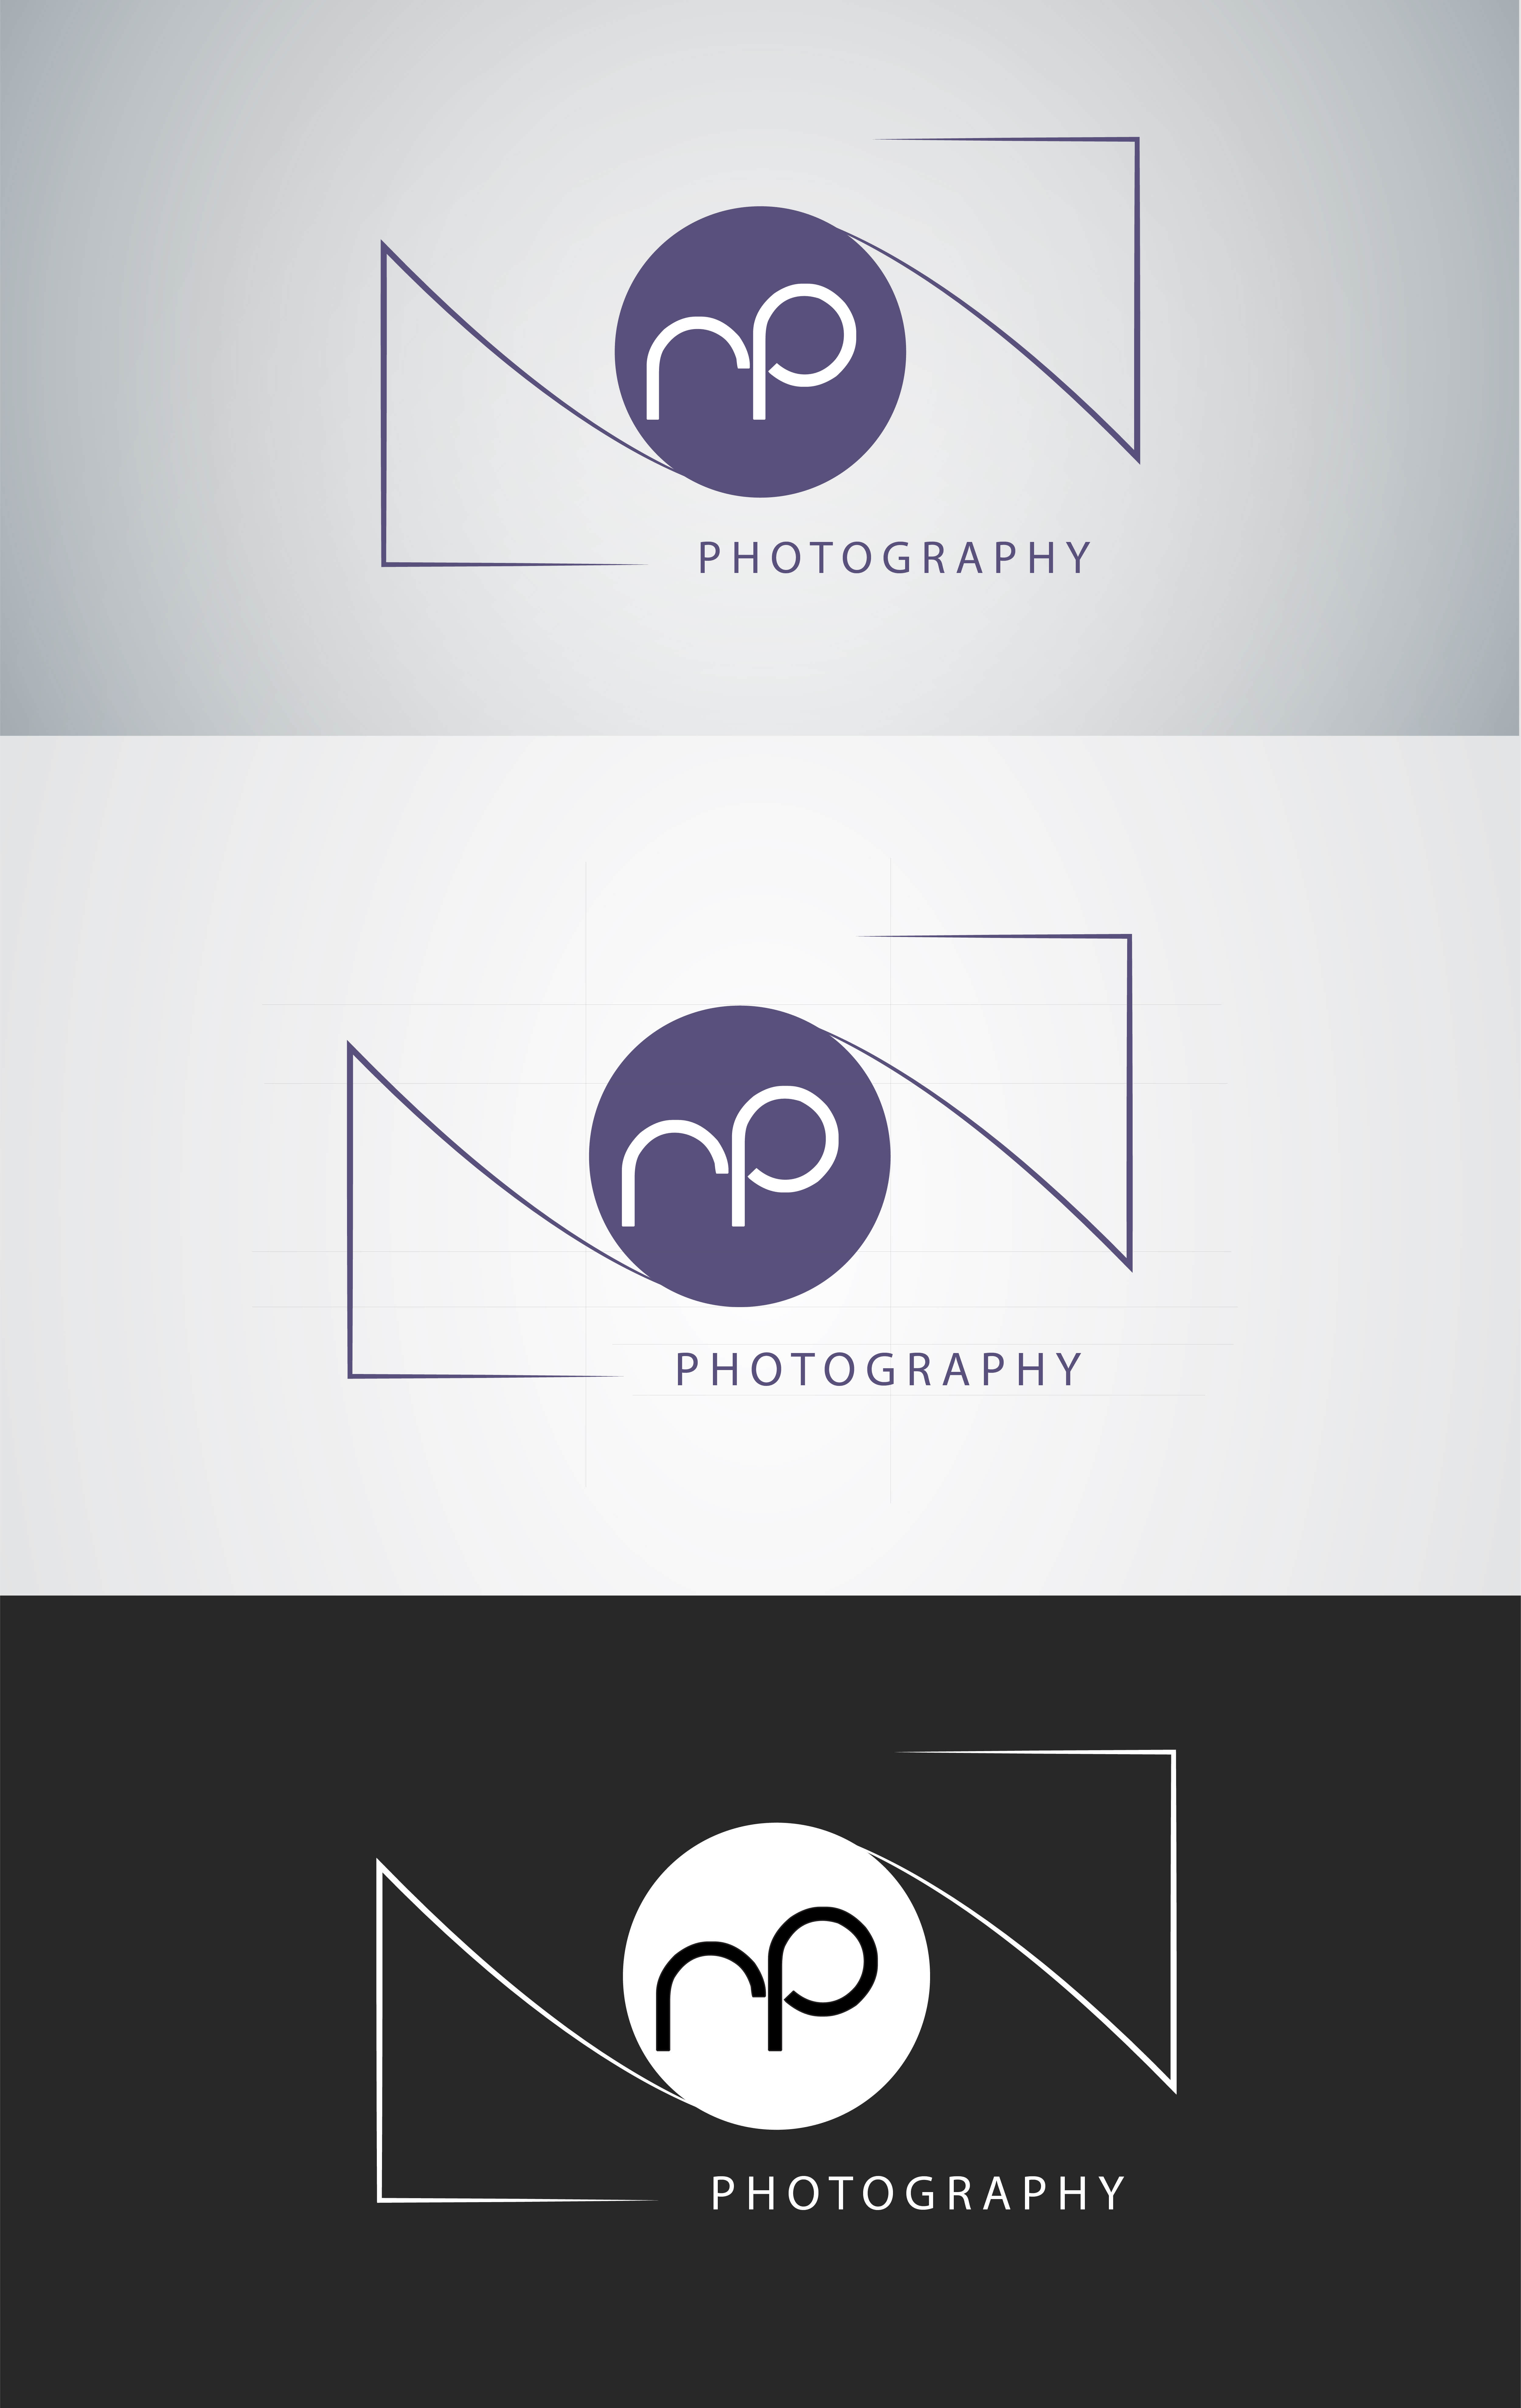 RP Photography Logo